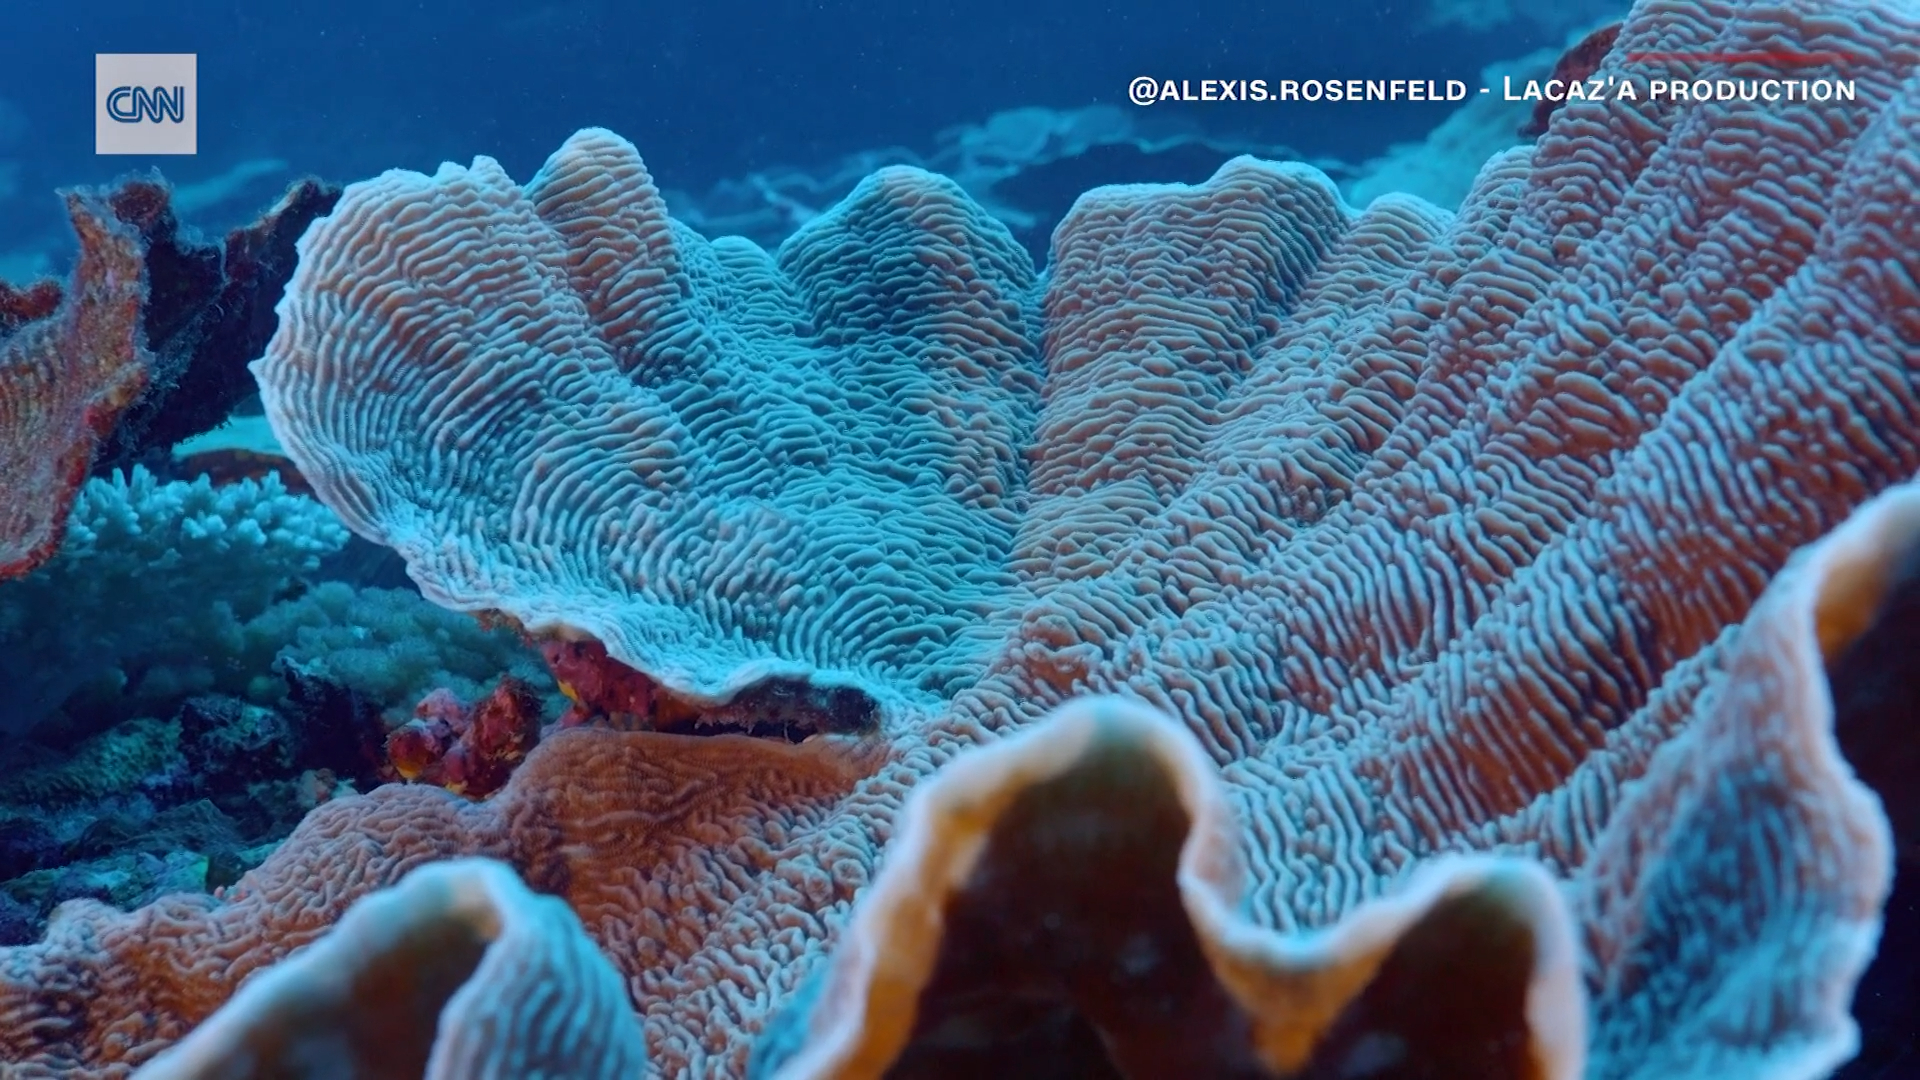 Rare, pristine coral reef found off Tahiti coast